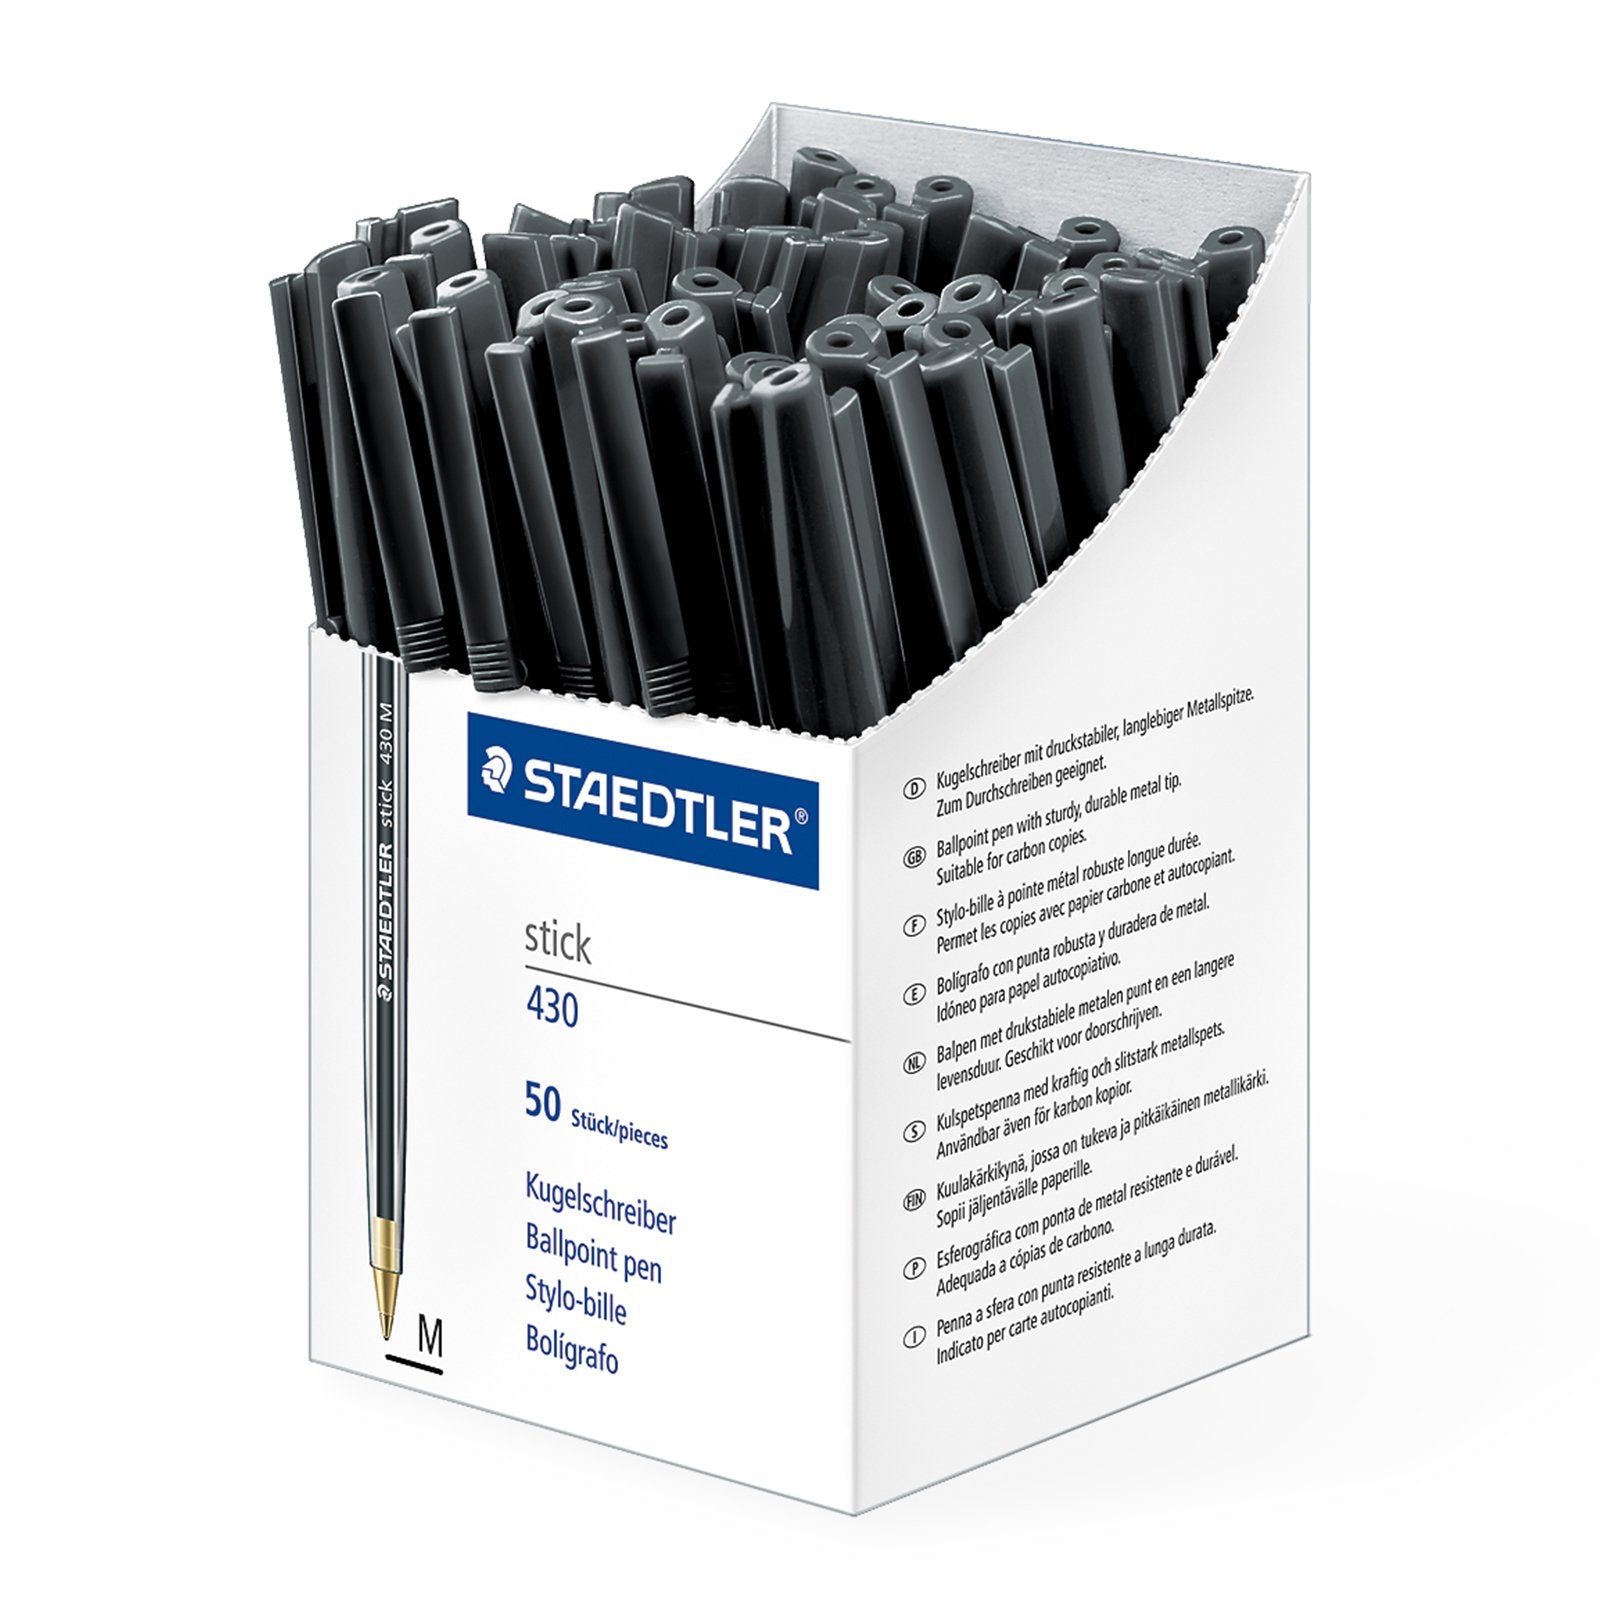 STAEDTLER - Caja de 50 Bolígrafos Stick 430 de Punta Media Color Negro